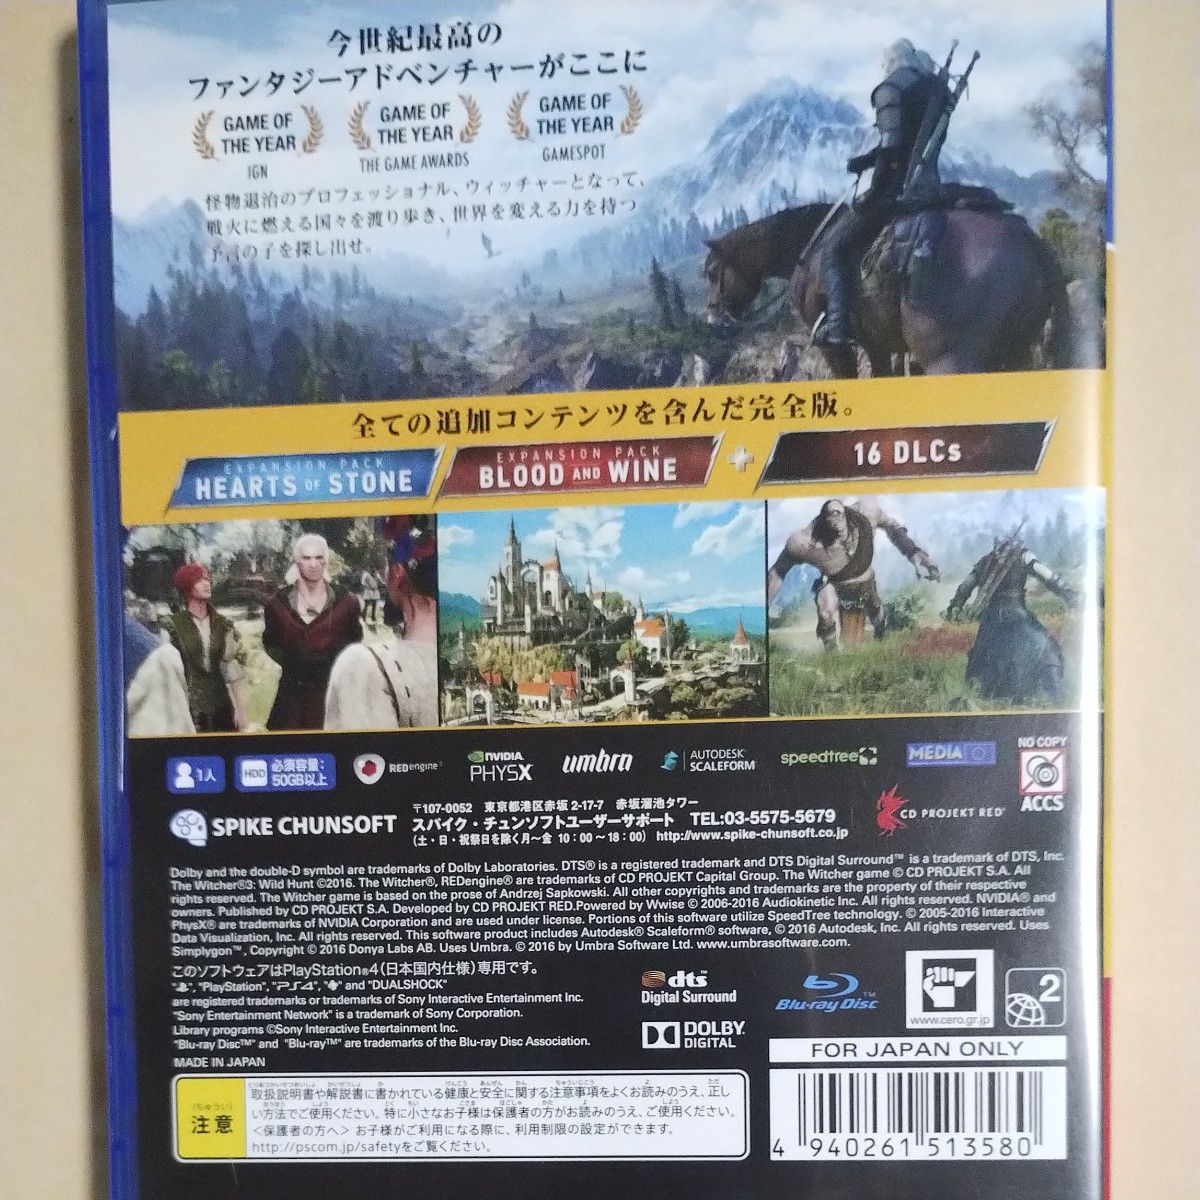 PS 4 ウィッチャー3 ワイルドハント ゲームオブザイヤーエディション